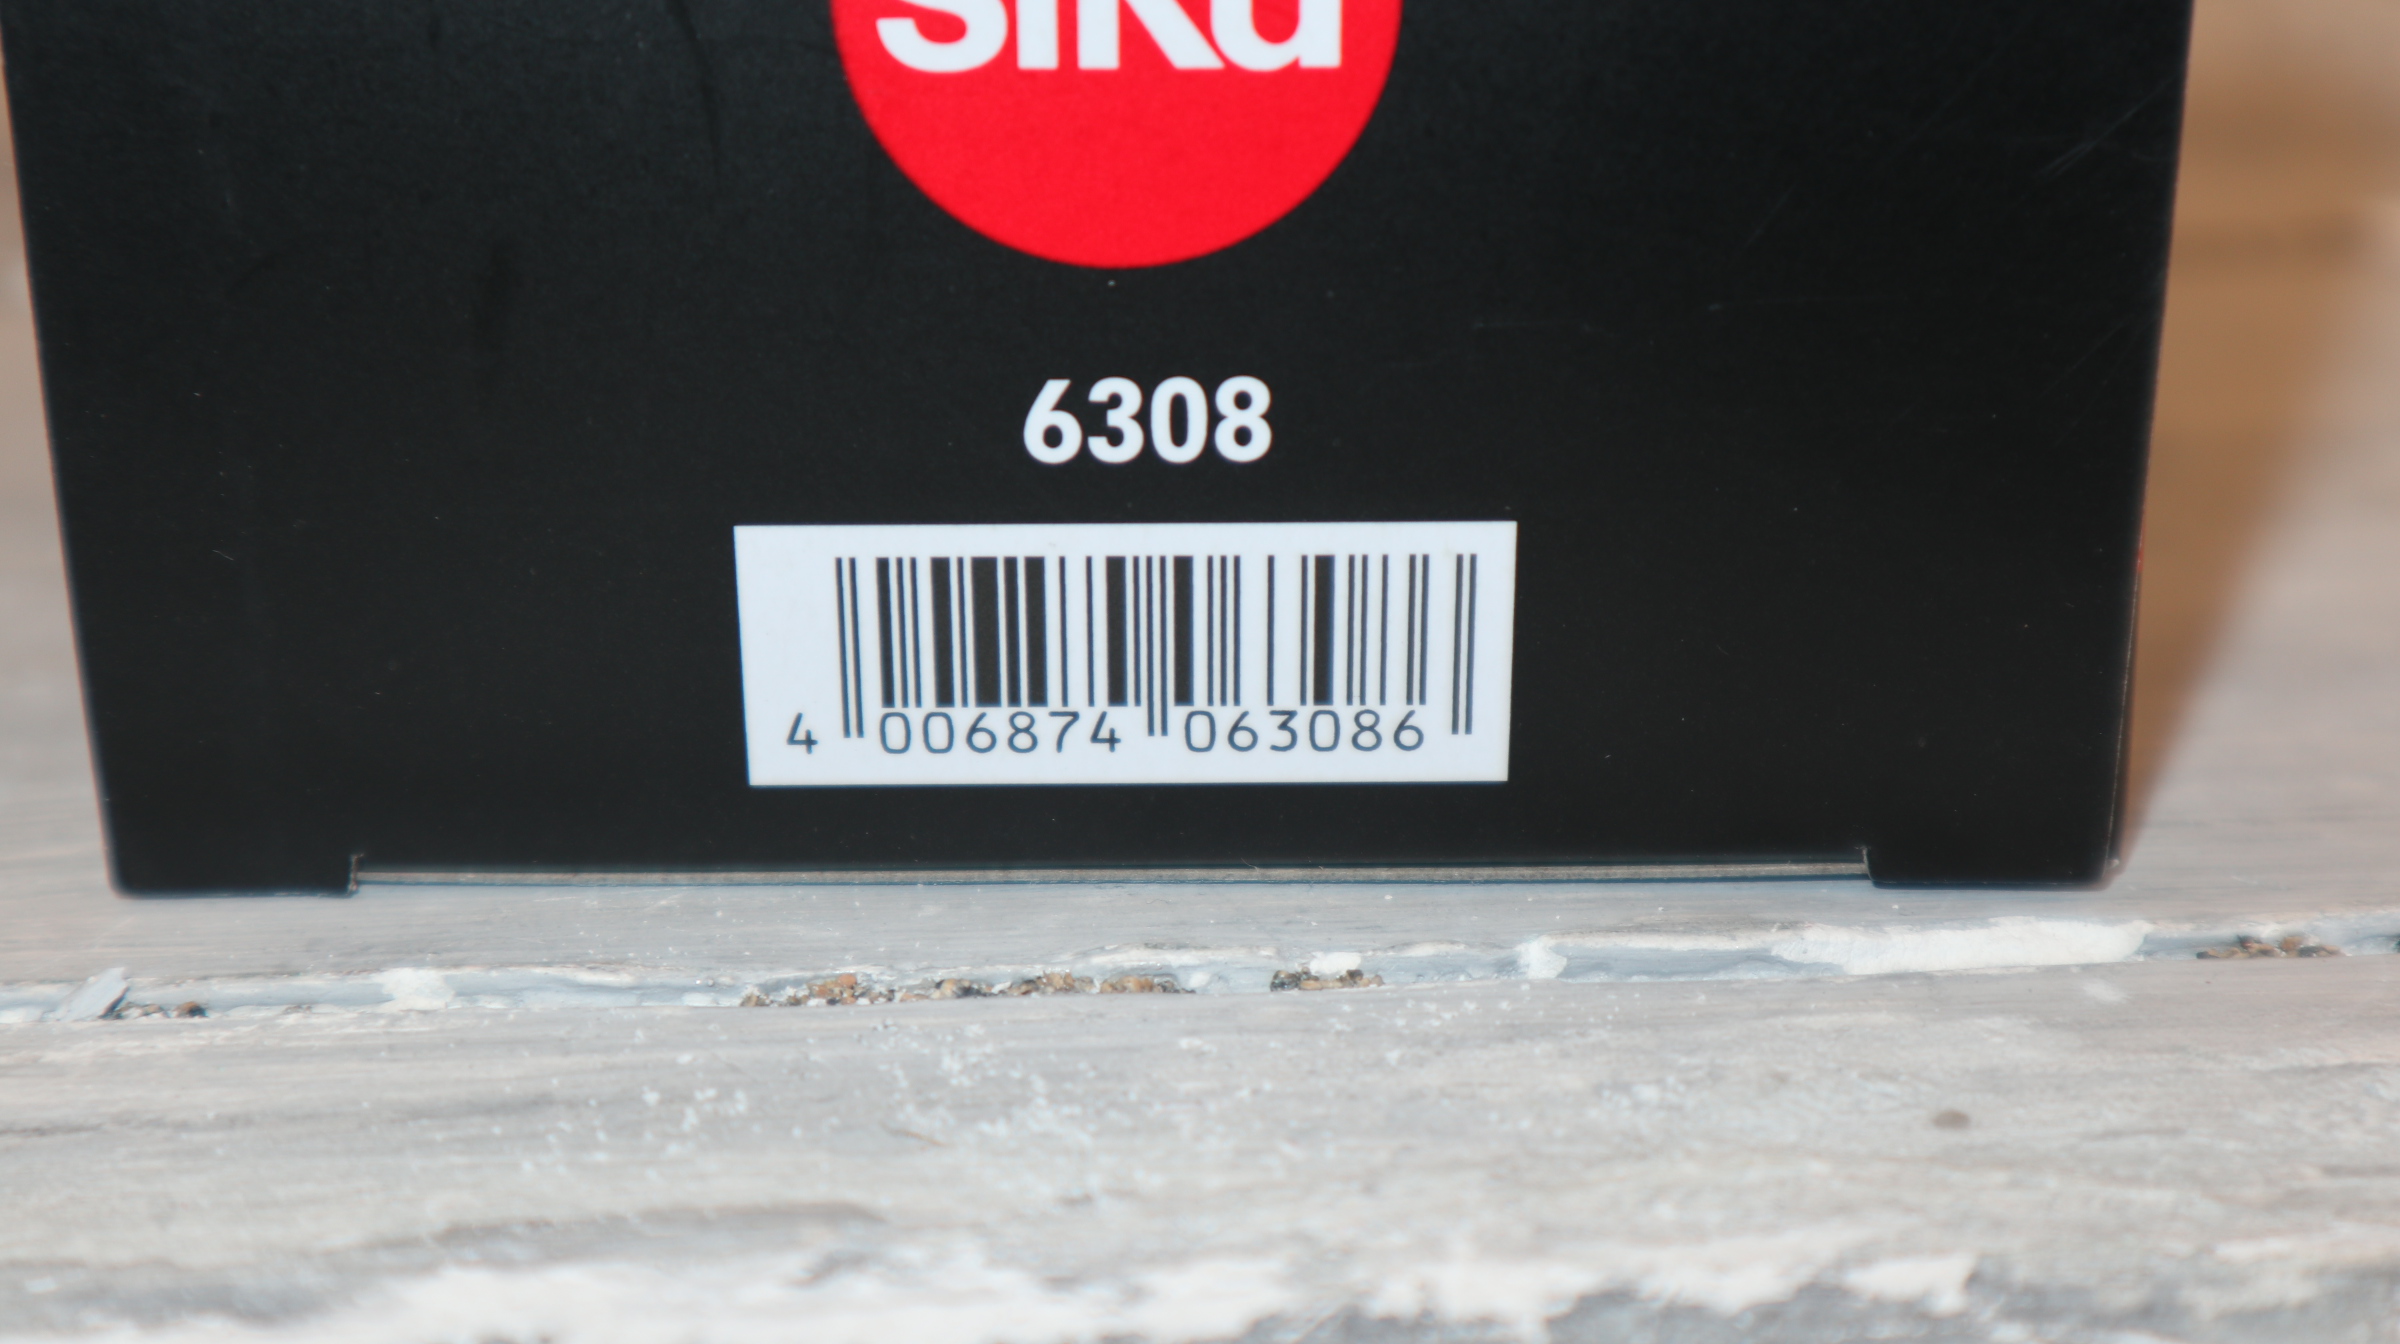 Siku 6308 in 1:55, Sportwagen Set "Black & White",  limited Edition, NEU in OVP